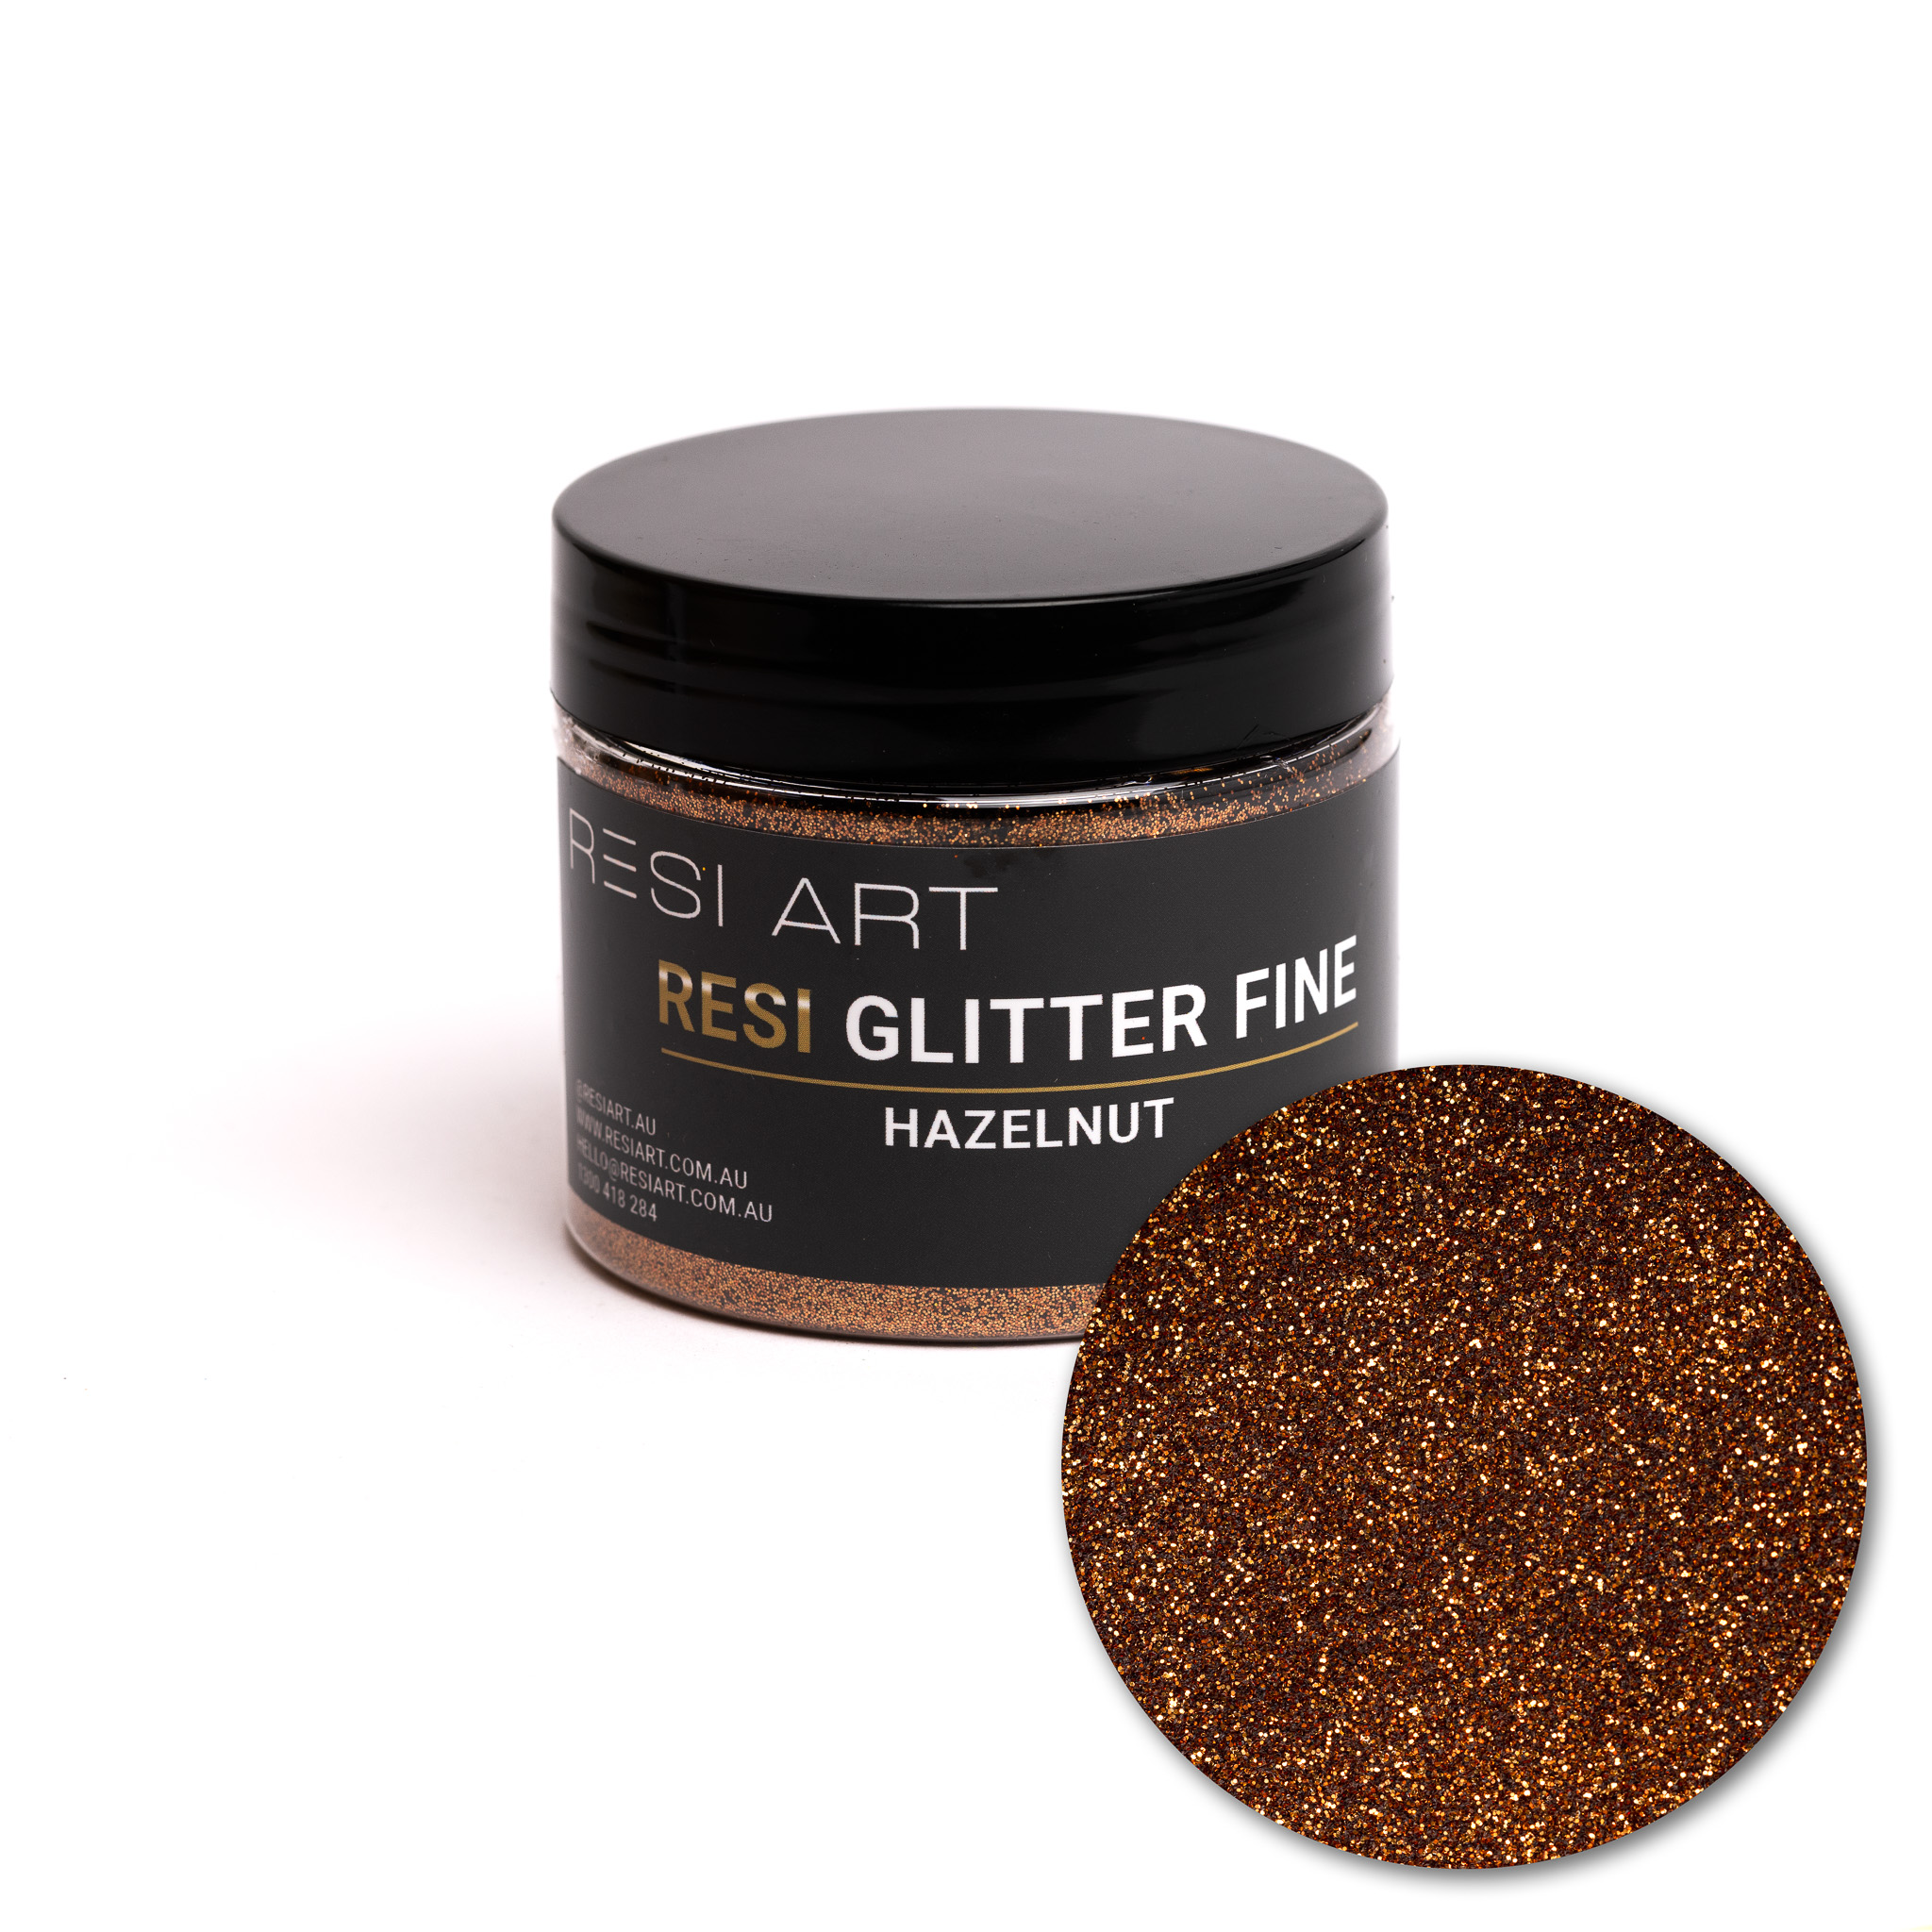 Hazelnut 100g - Resi Glitter Fine